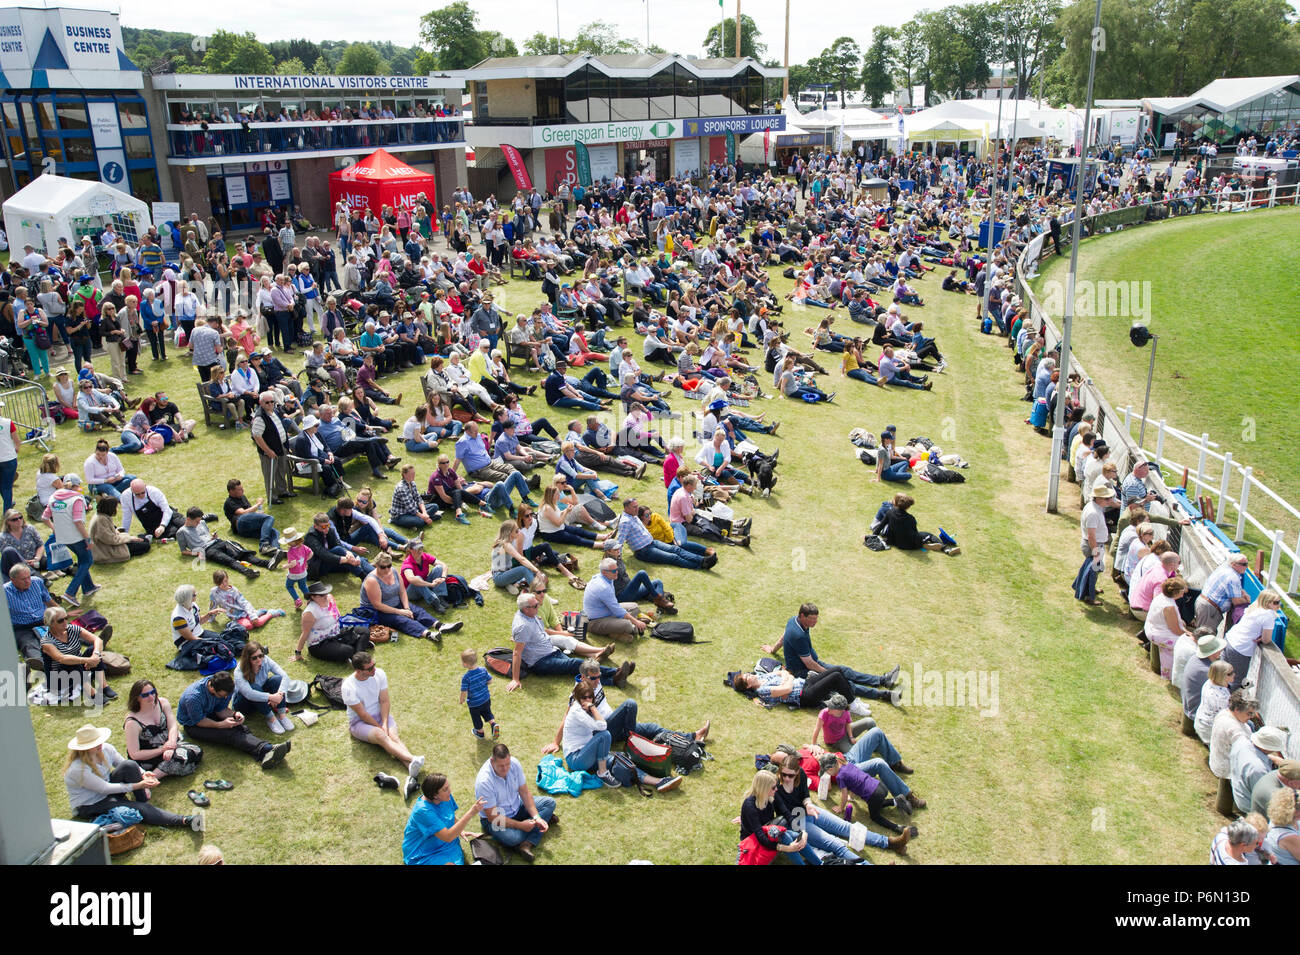 RHS 2018: Large crowds enjoy the warm weather at the Royal Highland show, Ingliston, Edinburgh. Stock Photo